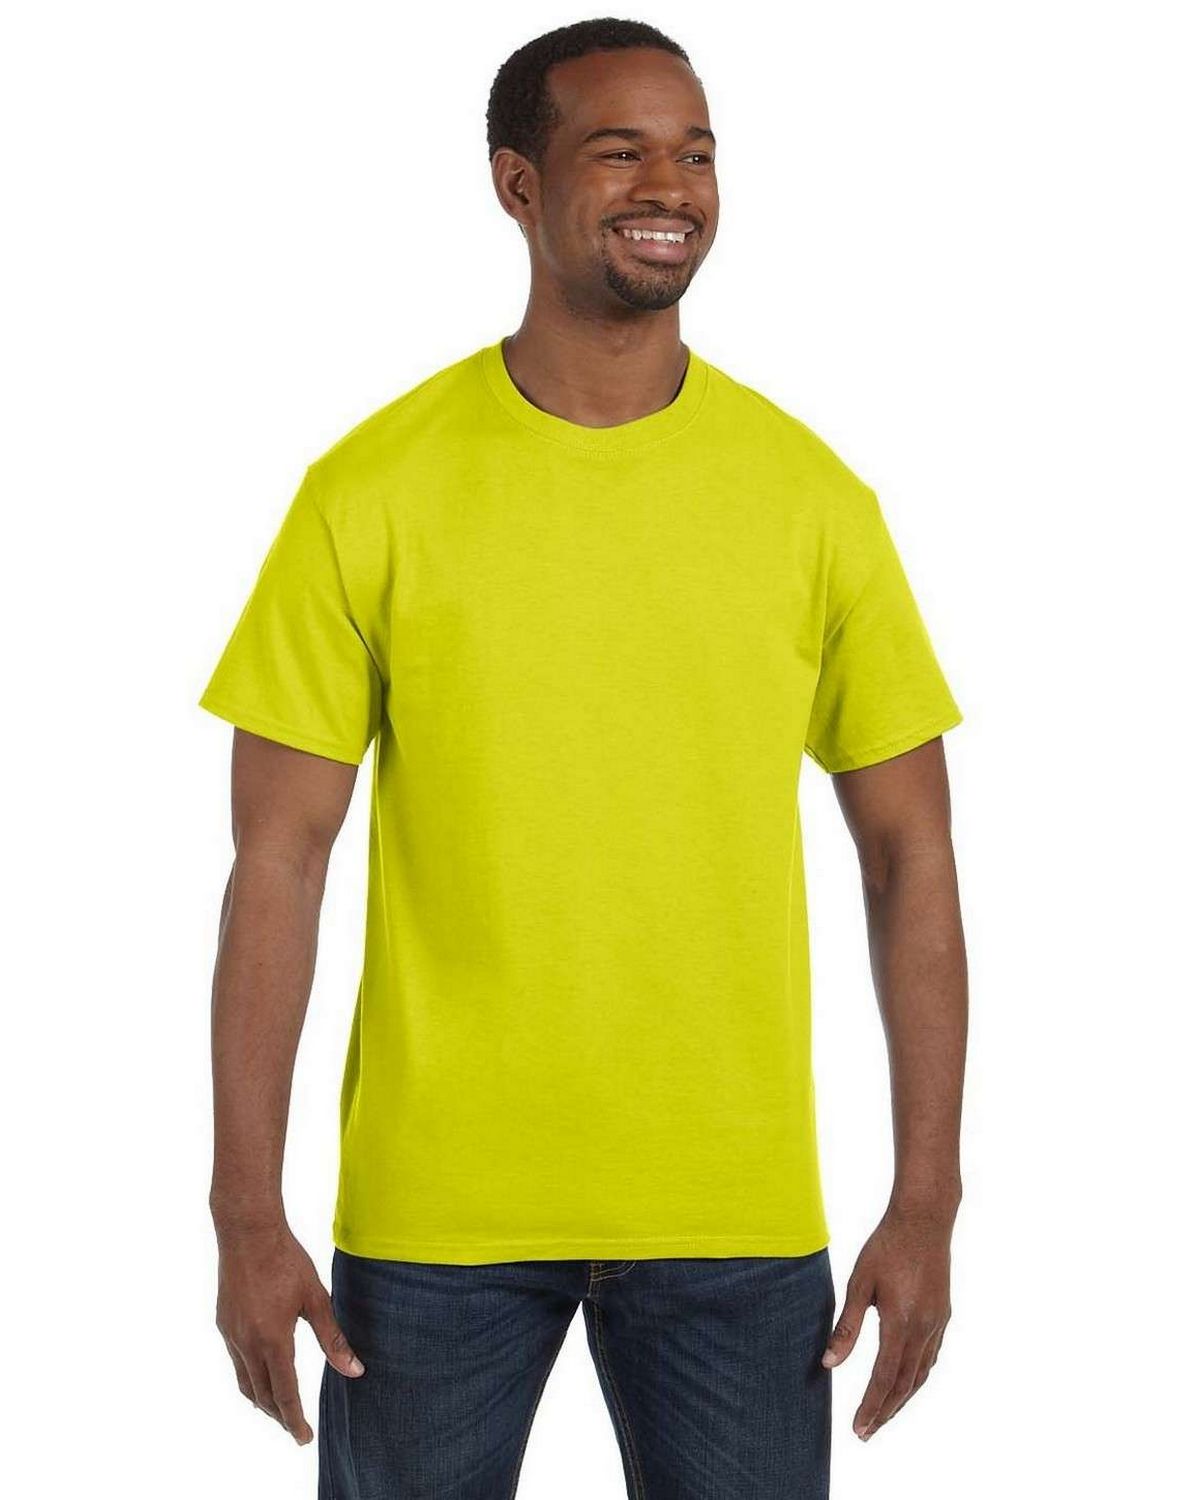 Green Q Hanes Tagless Tee T-Shirt 